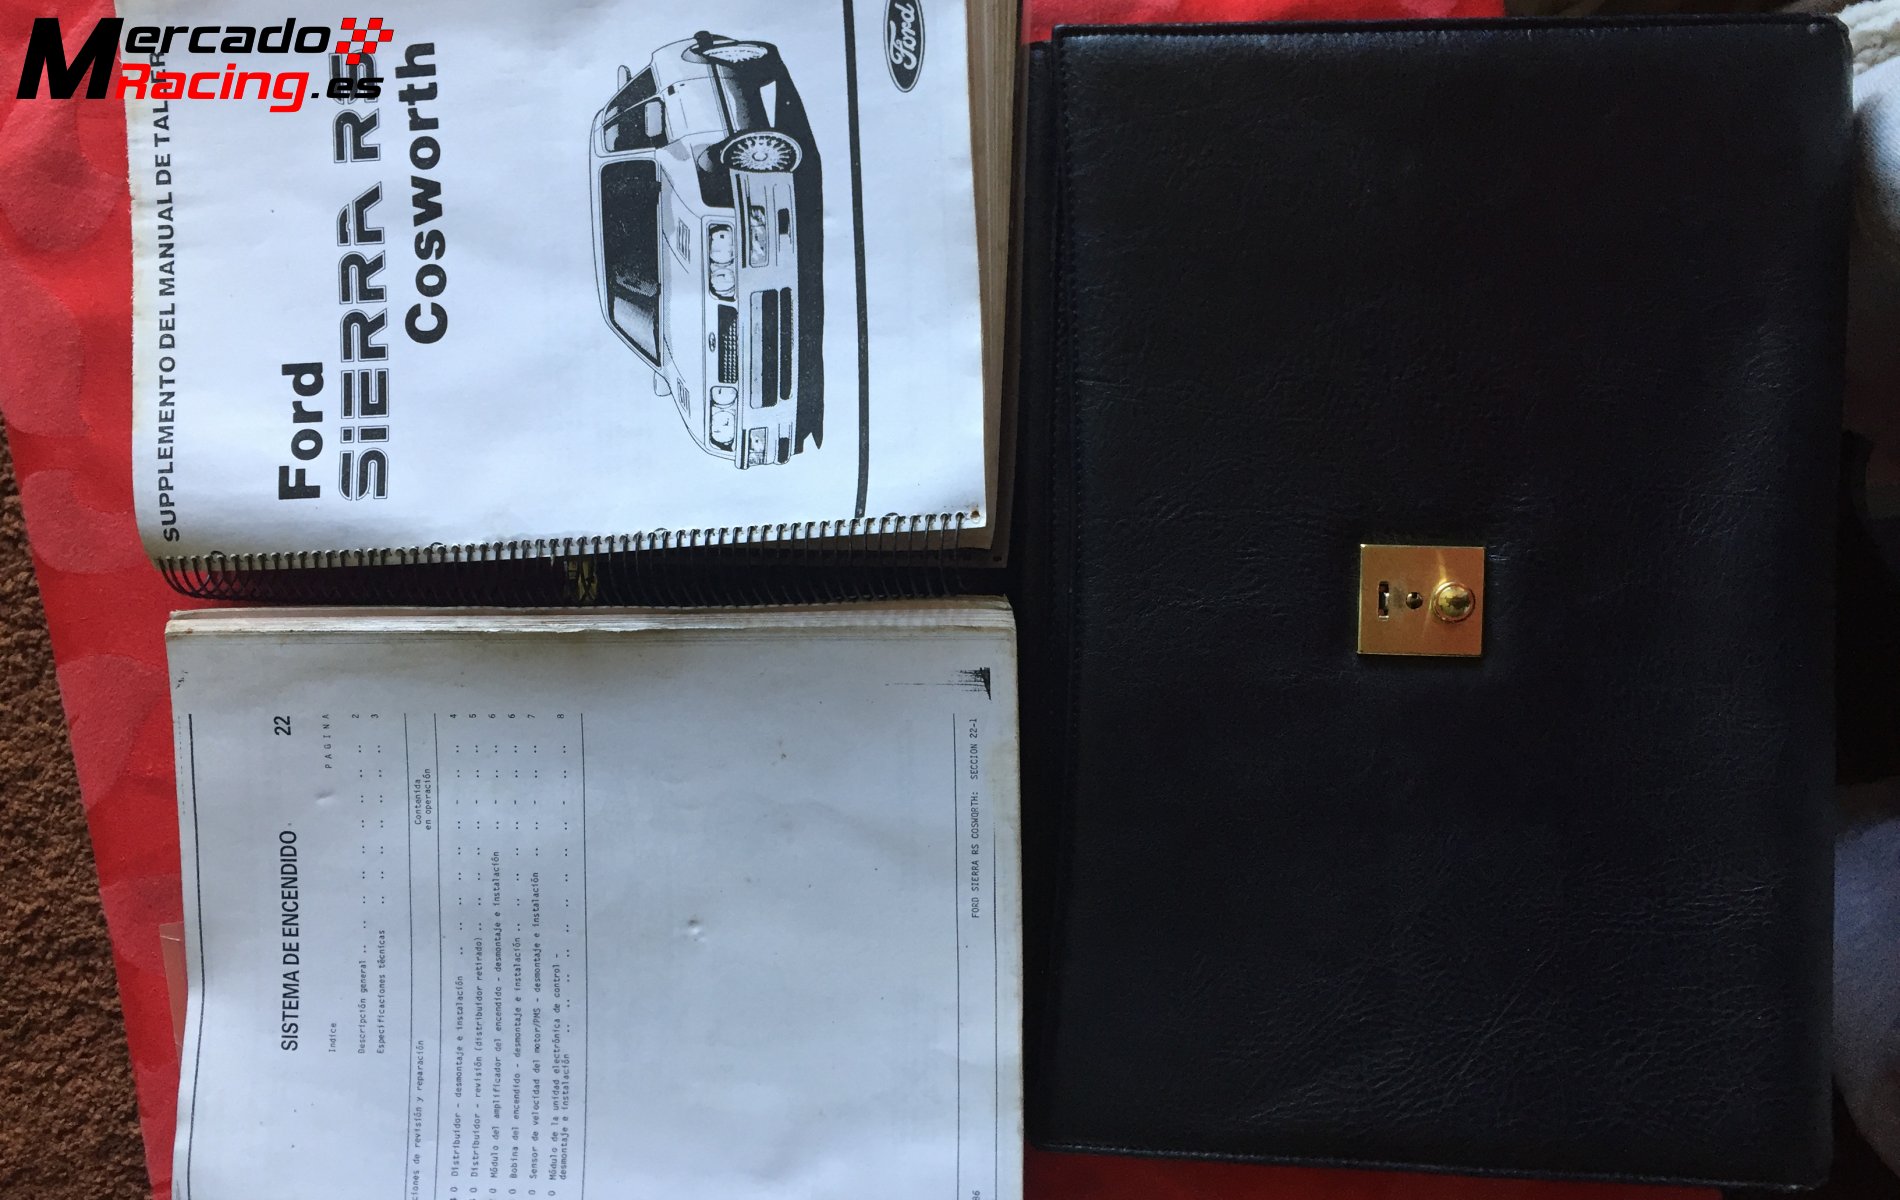 Manual sierra cosworth año 1986